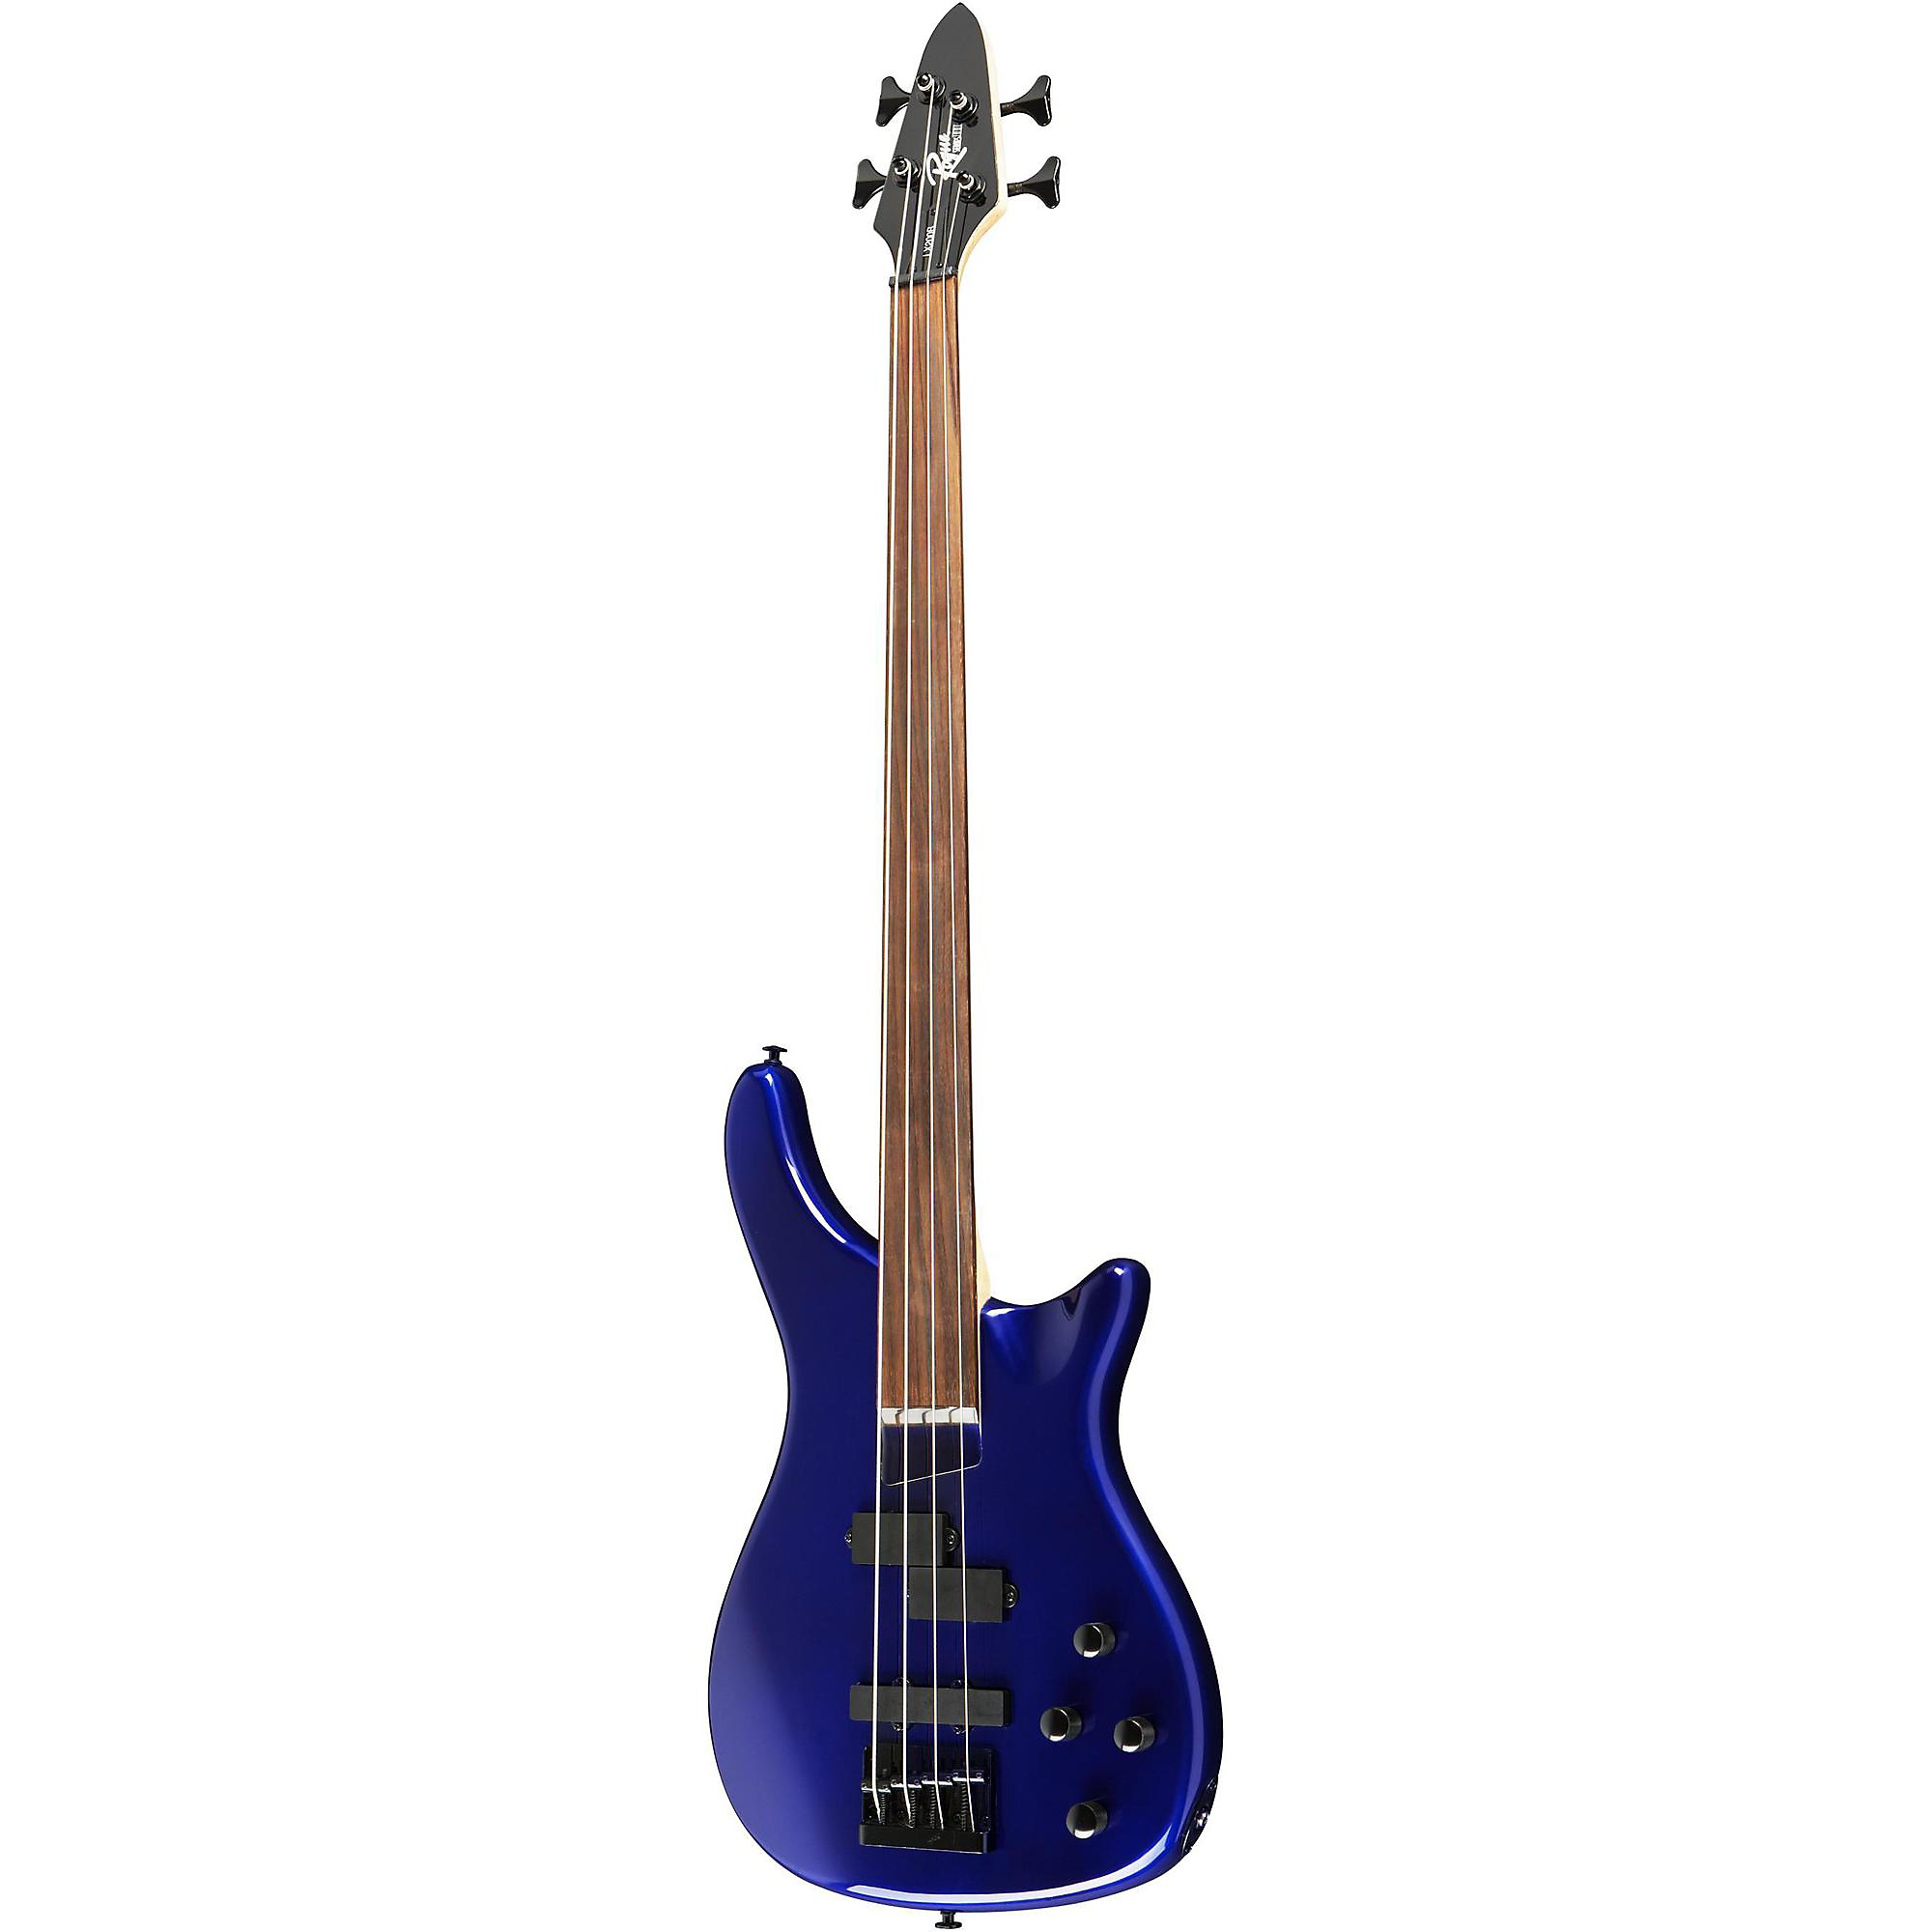 Rogue LX200BF Fretless Series III Электрическая бас-гитара синий металлик